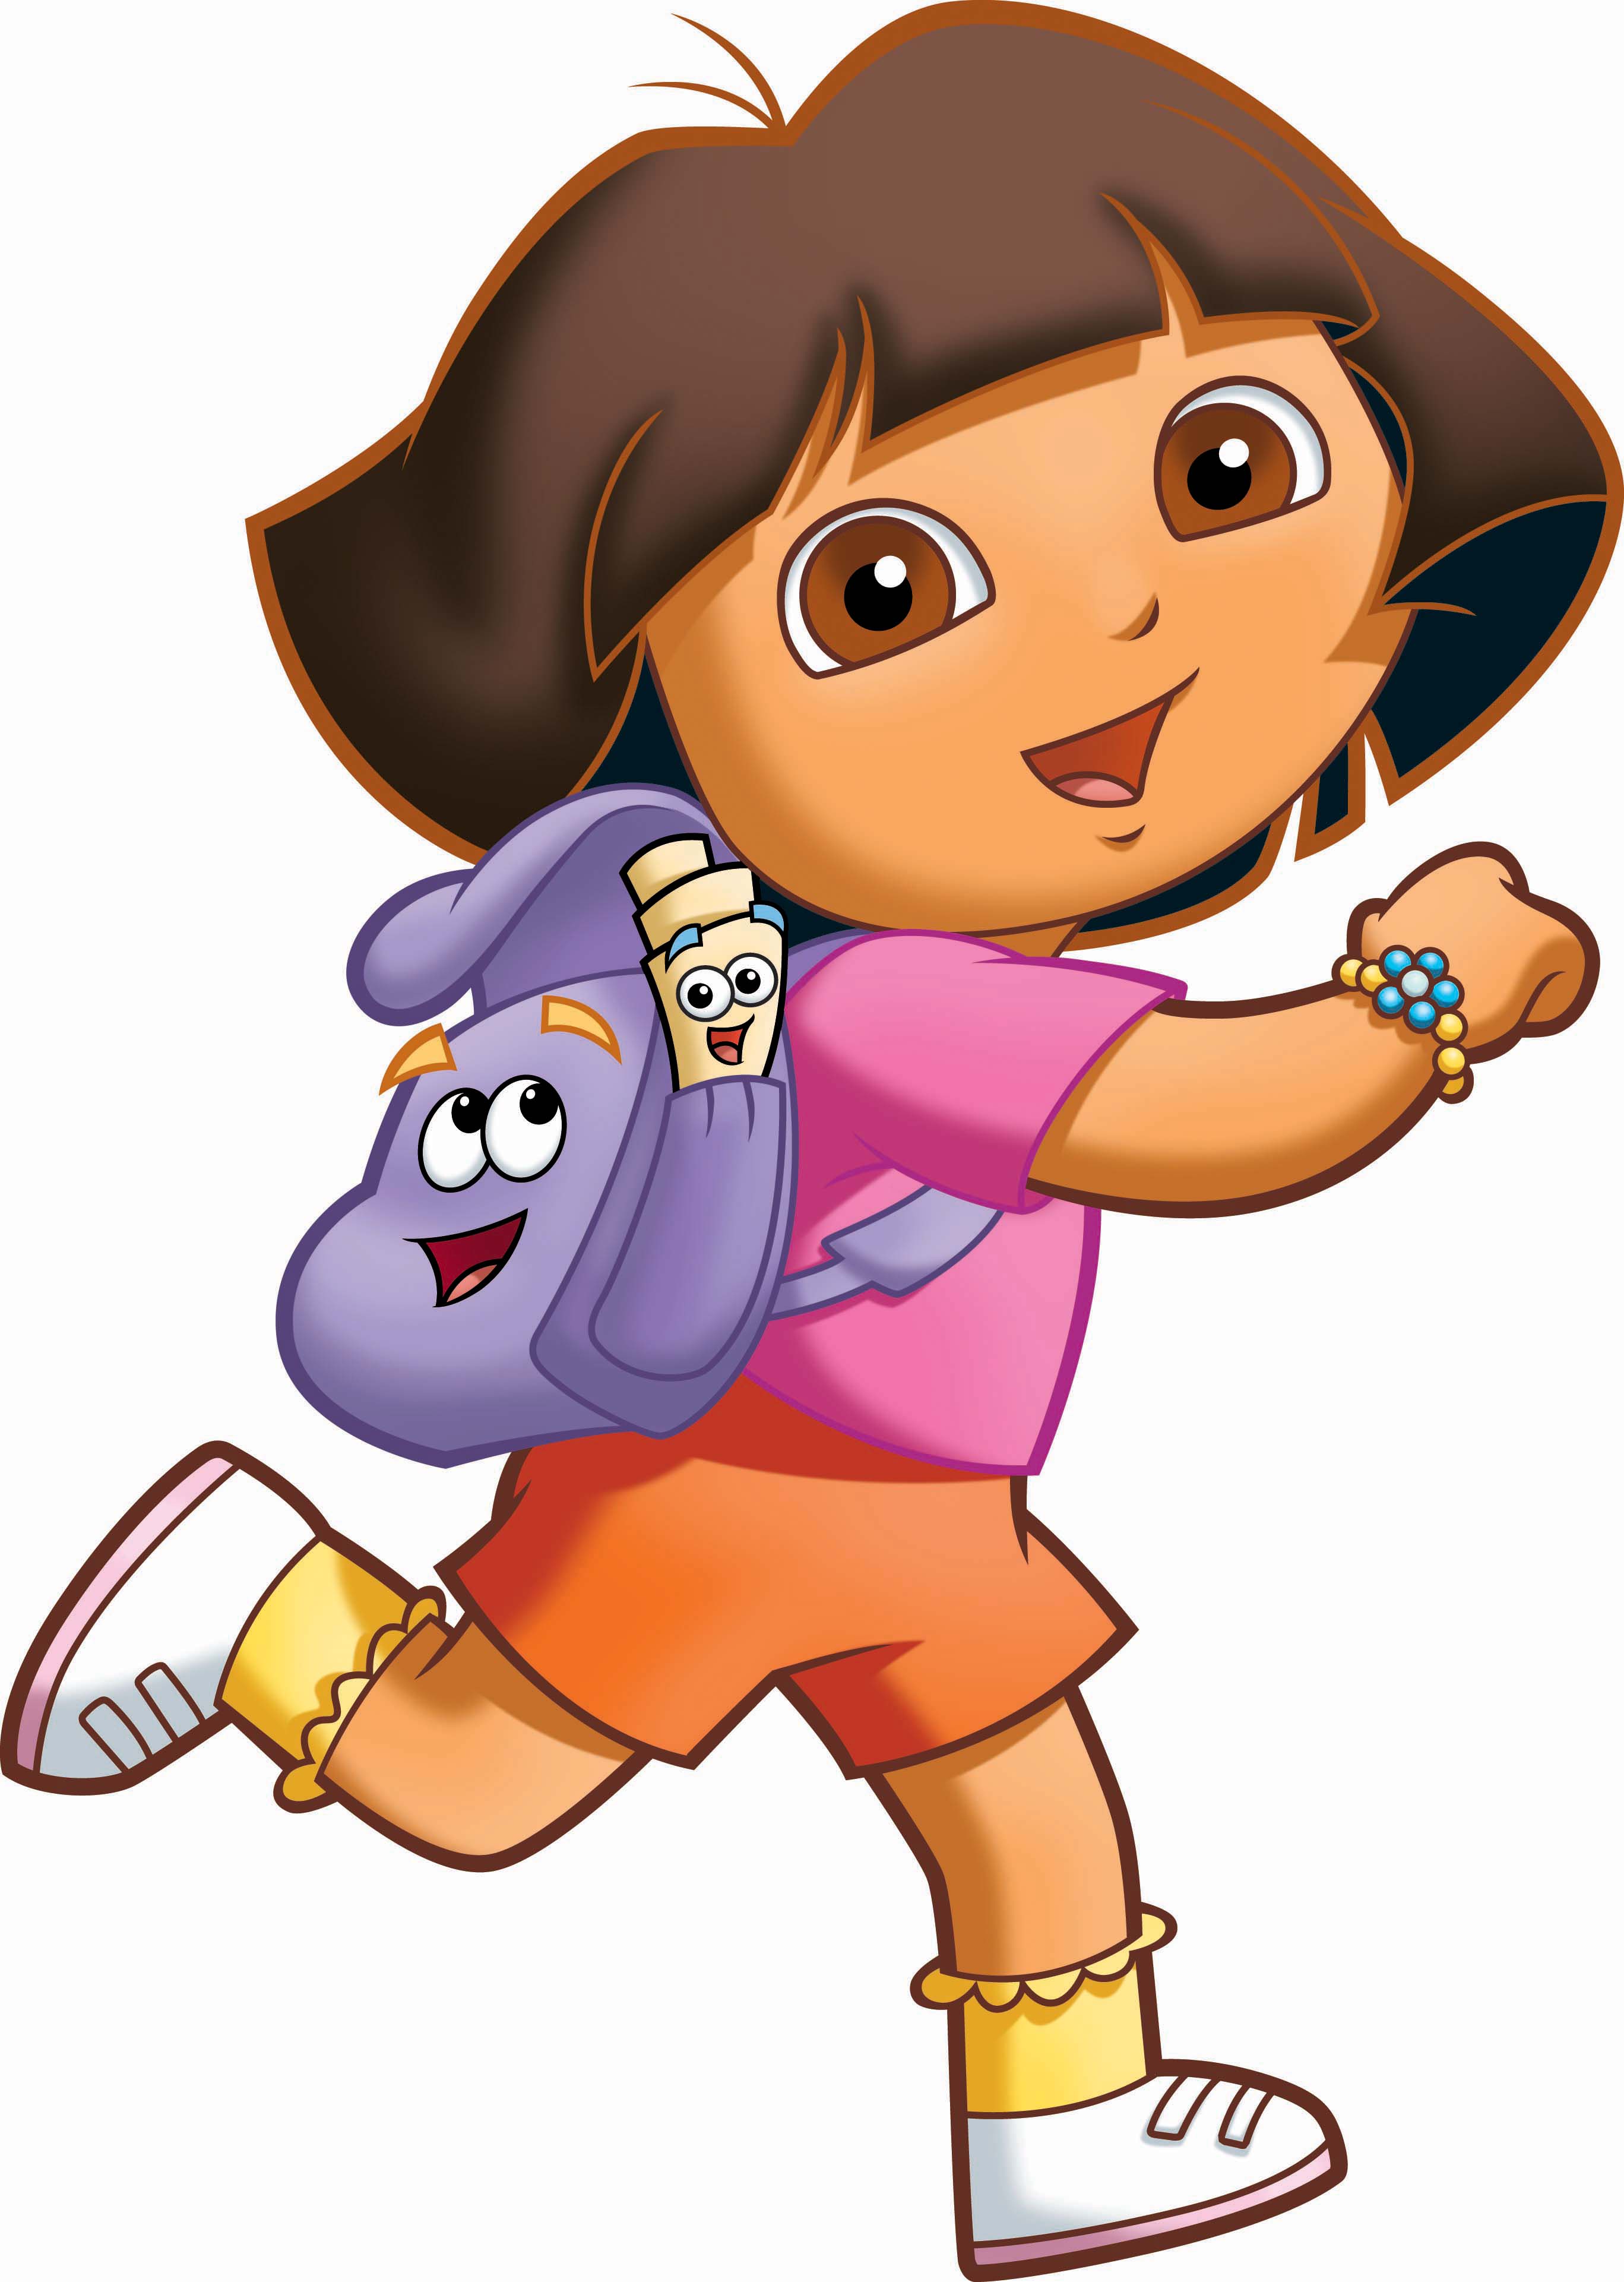 Amazing Dora The Explorer Pictures & Backgrounds